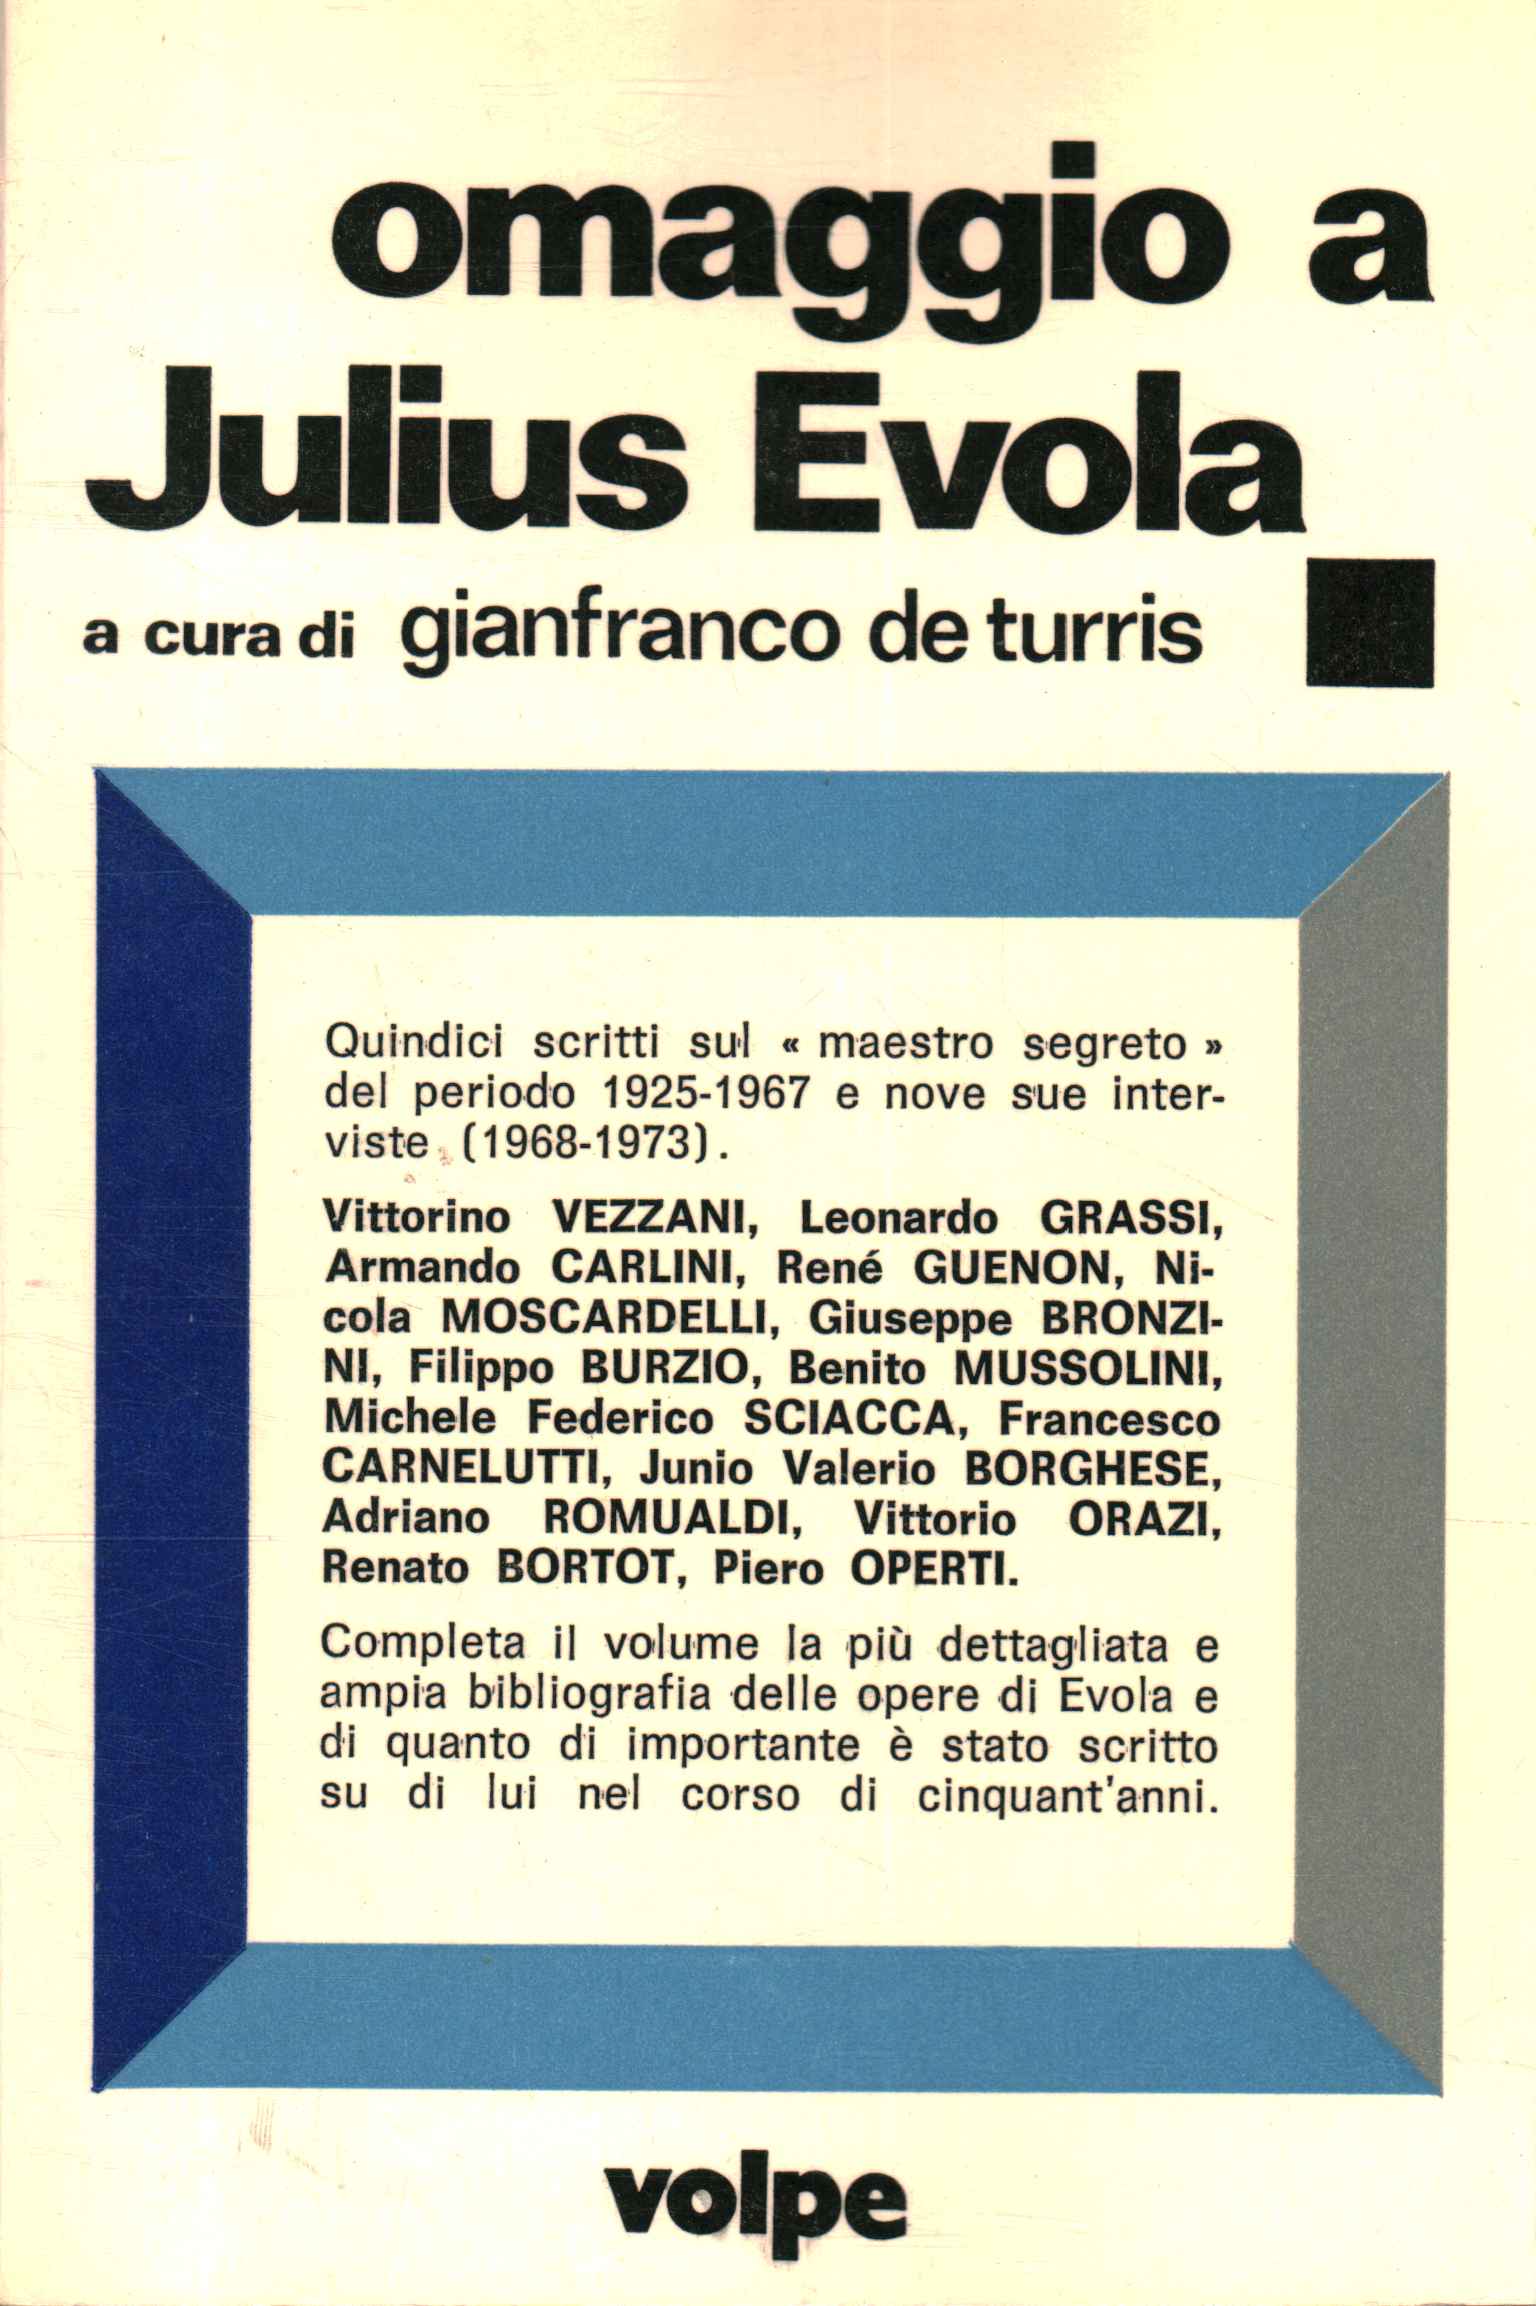 Homage to Julius Evola